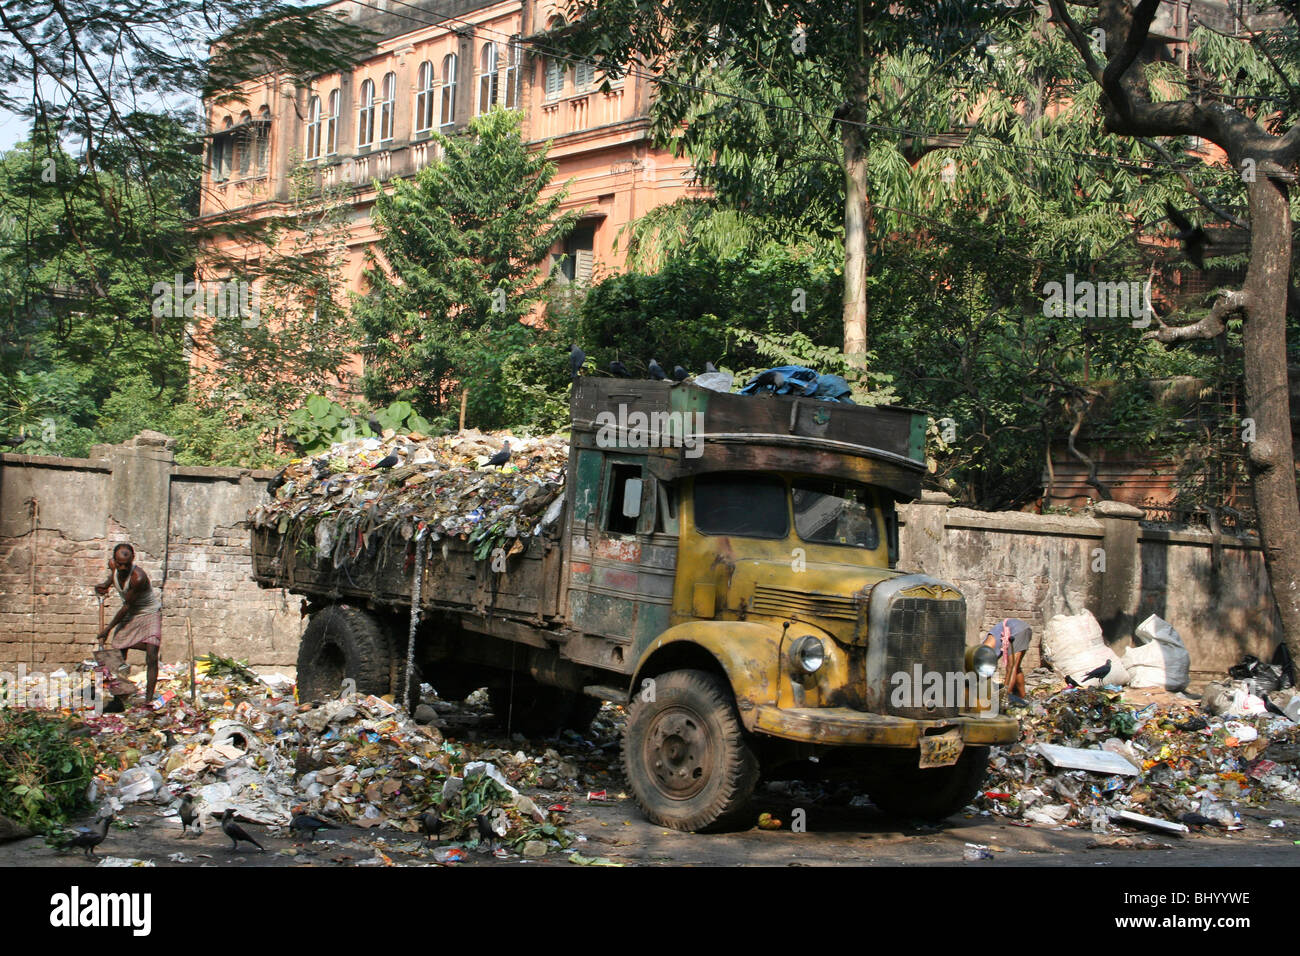 Indian Street Scene With Rubbish Truck Taken In Kolkatta, Stock Photo